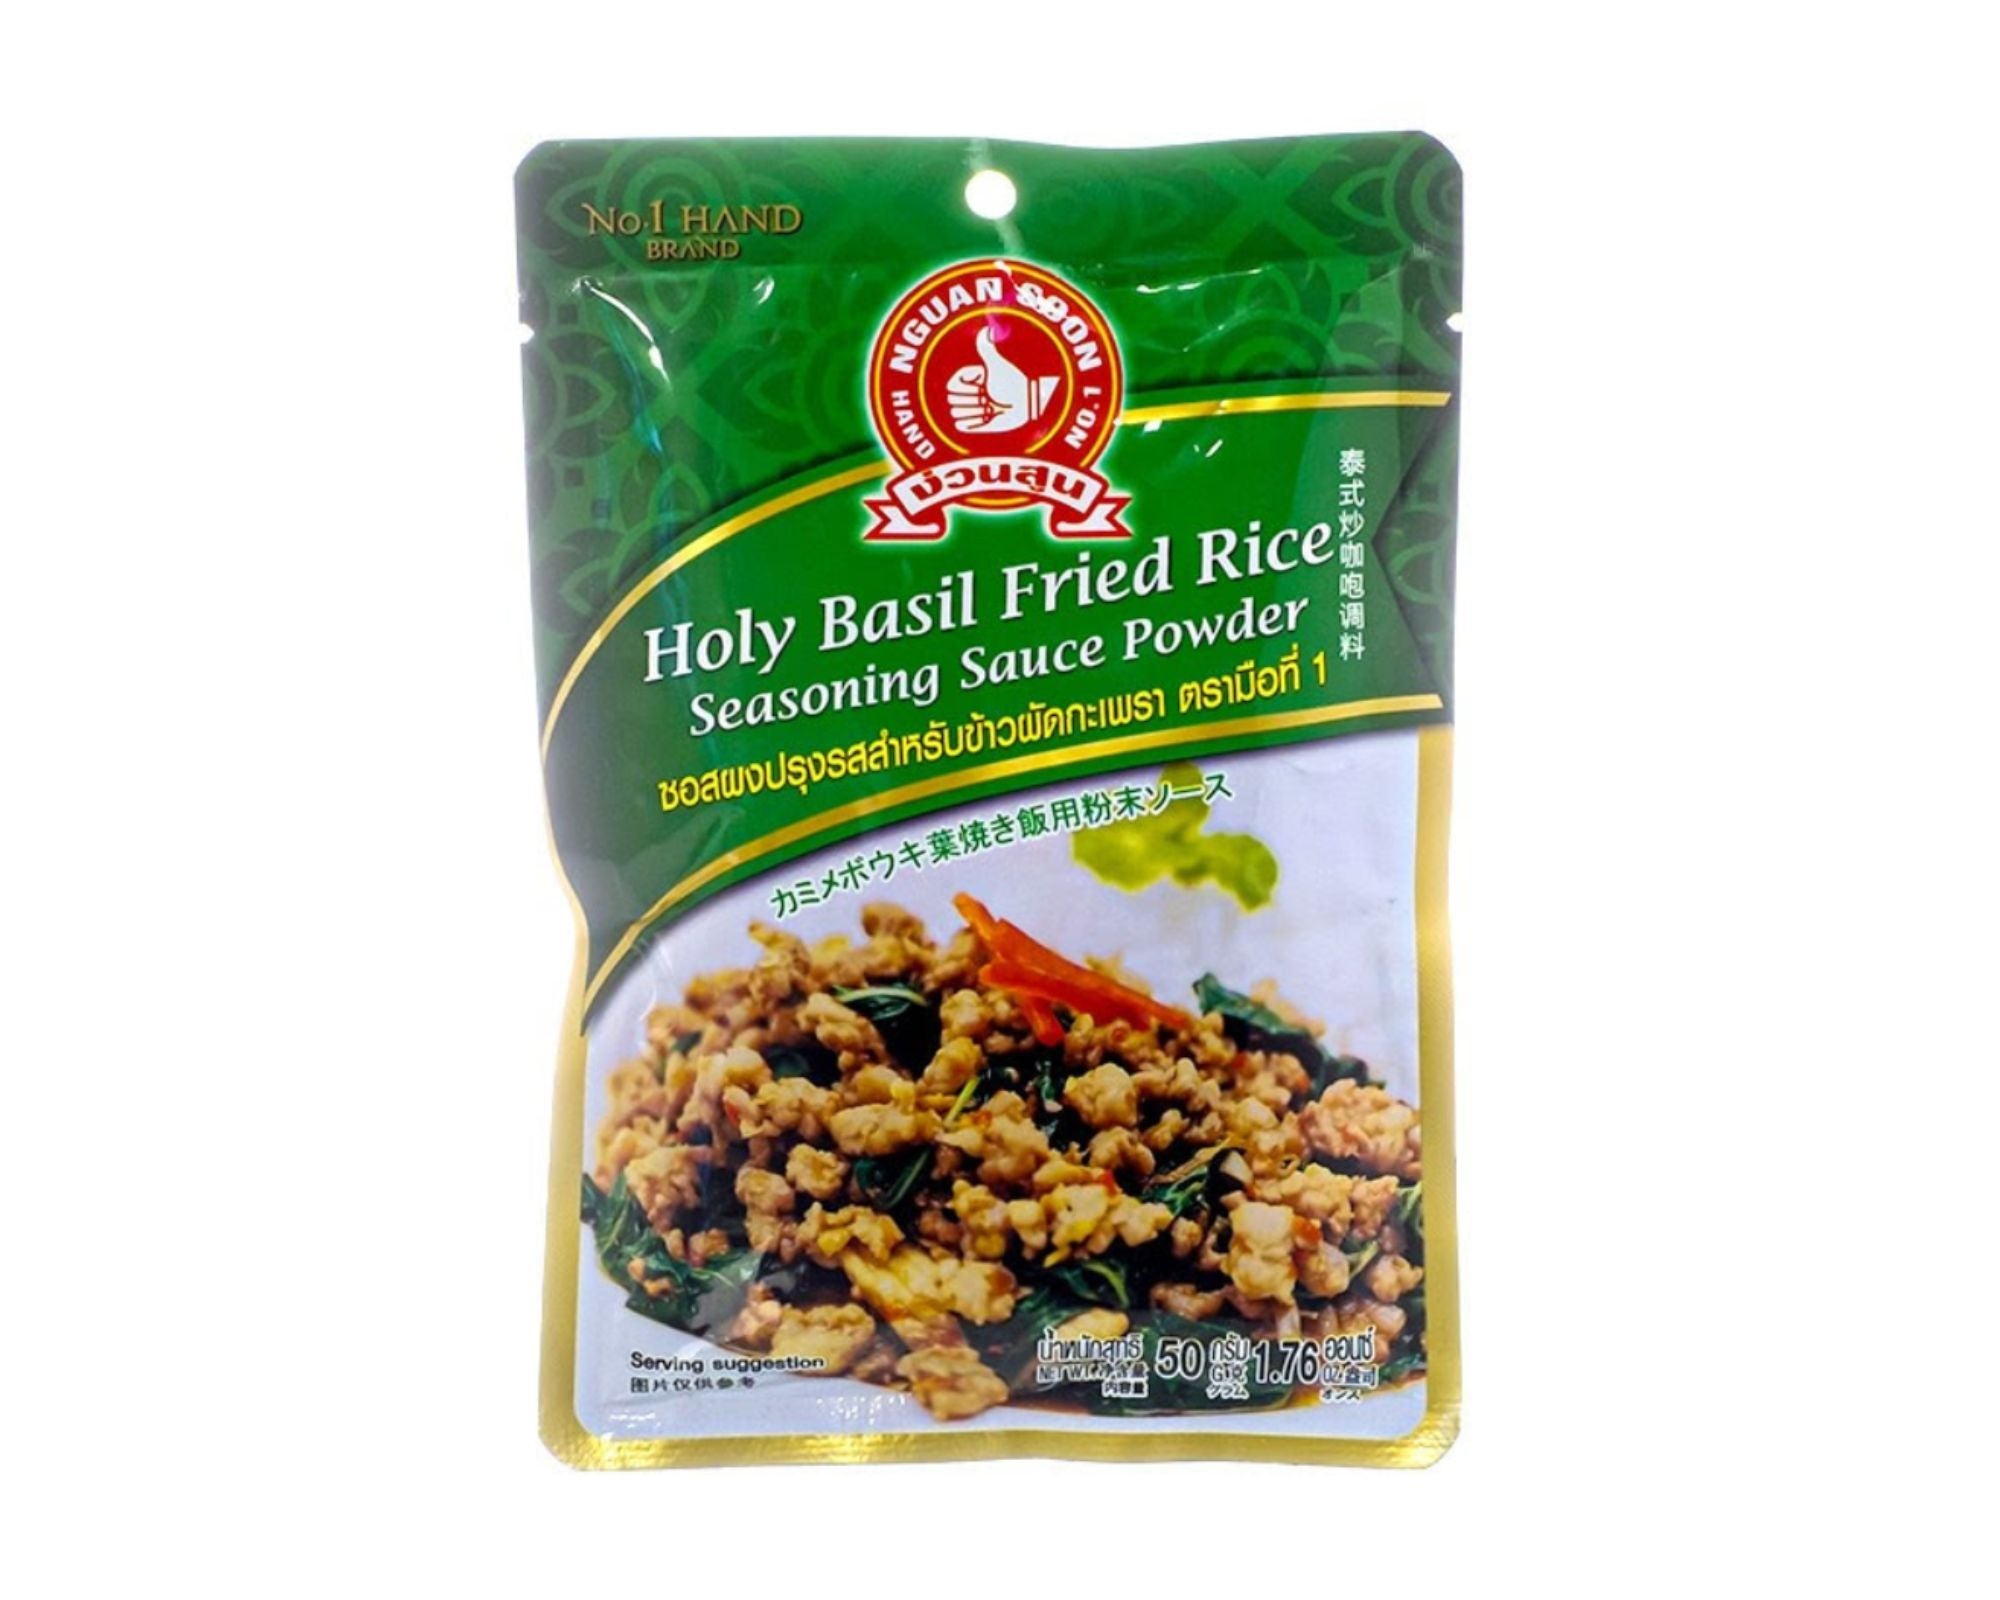 Tempero Em Pó p/ Arroz com Manjericão (Holy Basil Fried Rice Seasoning Sauce Powder) Nguan Soon 50g